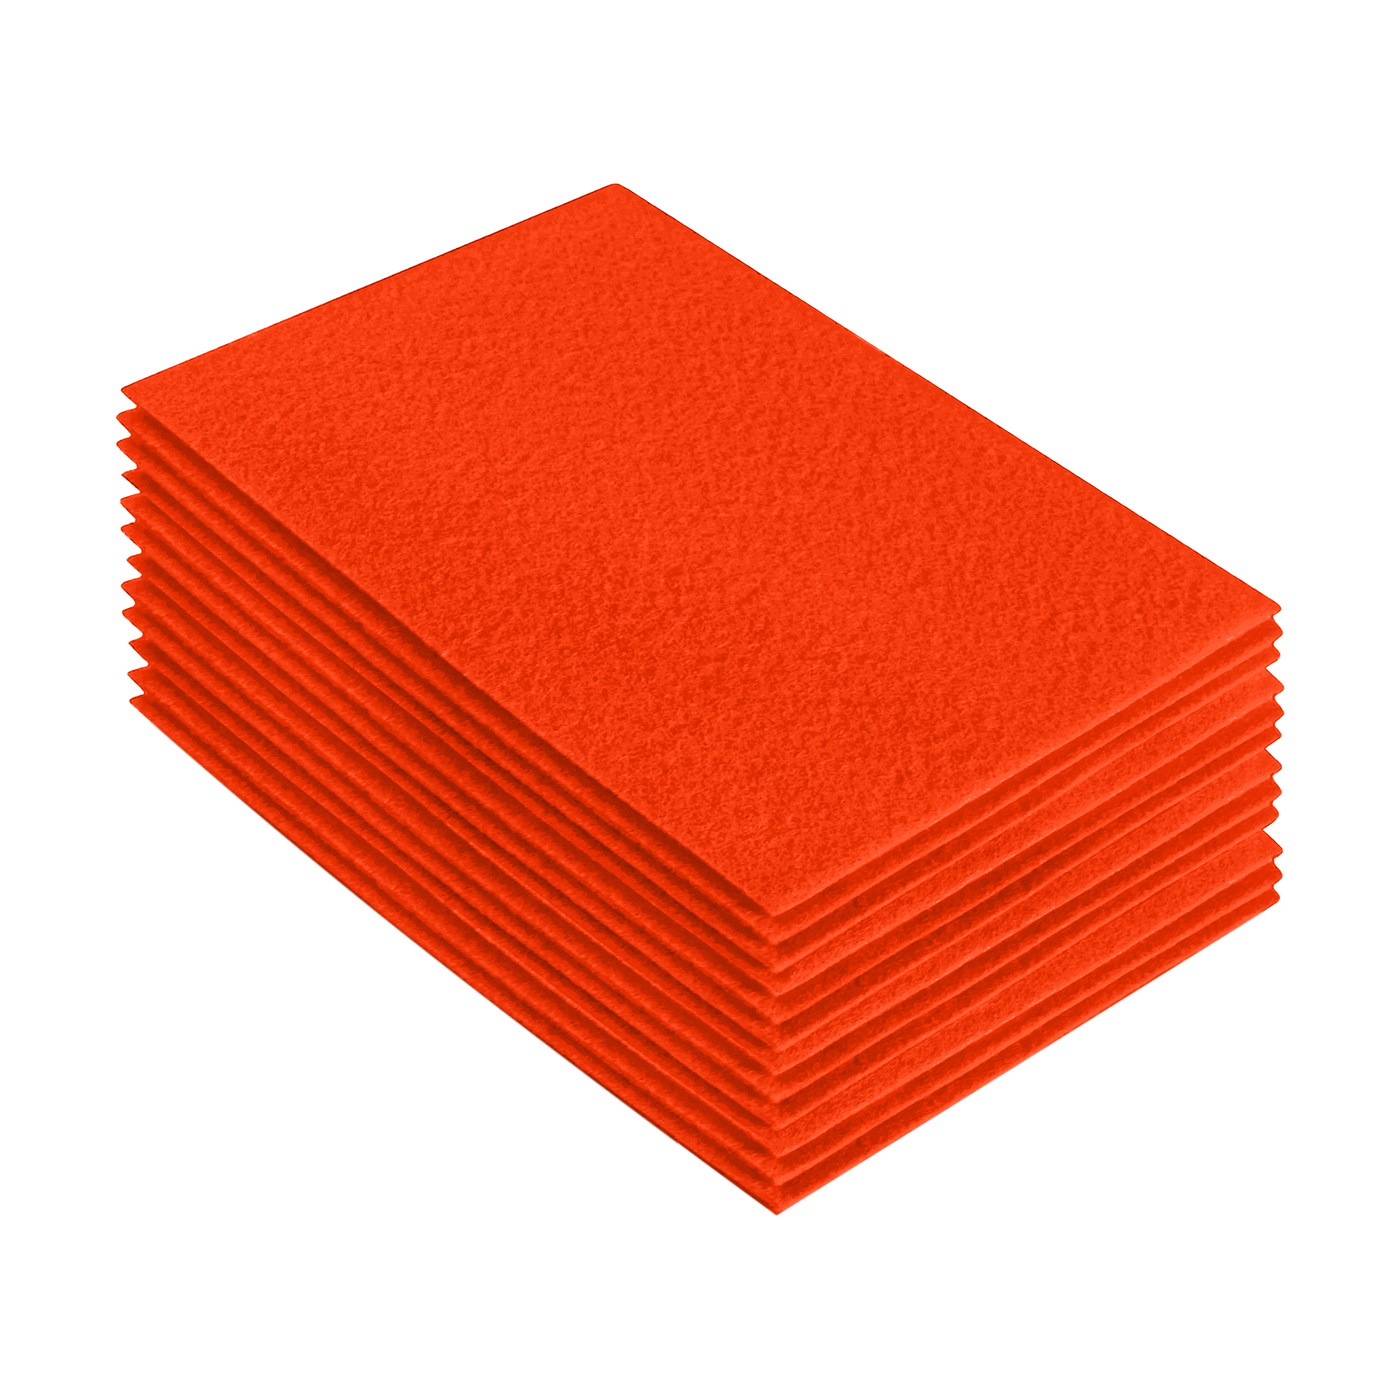 Acrylic Felt 9"X12" Sheet Packs | Neon Orange - FabricLA.com